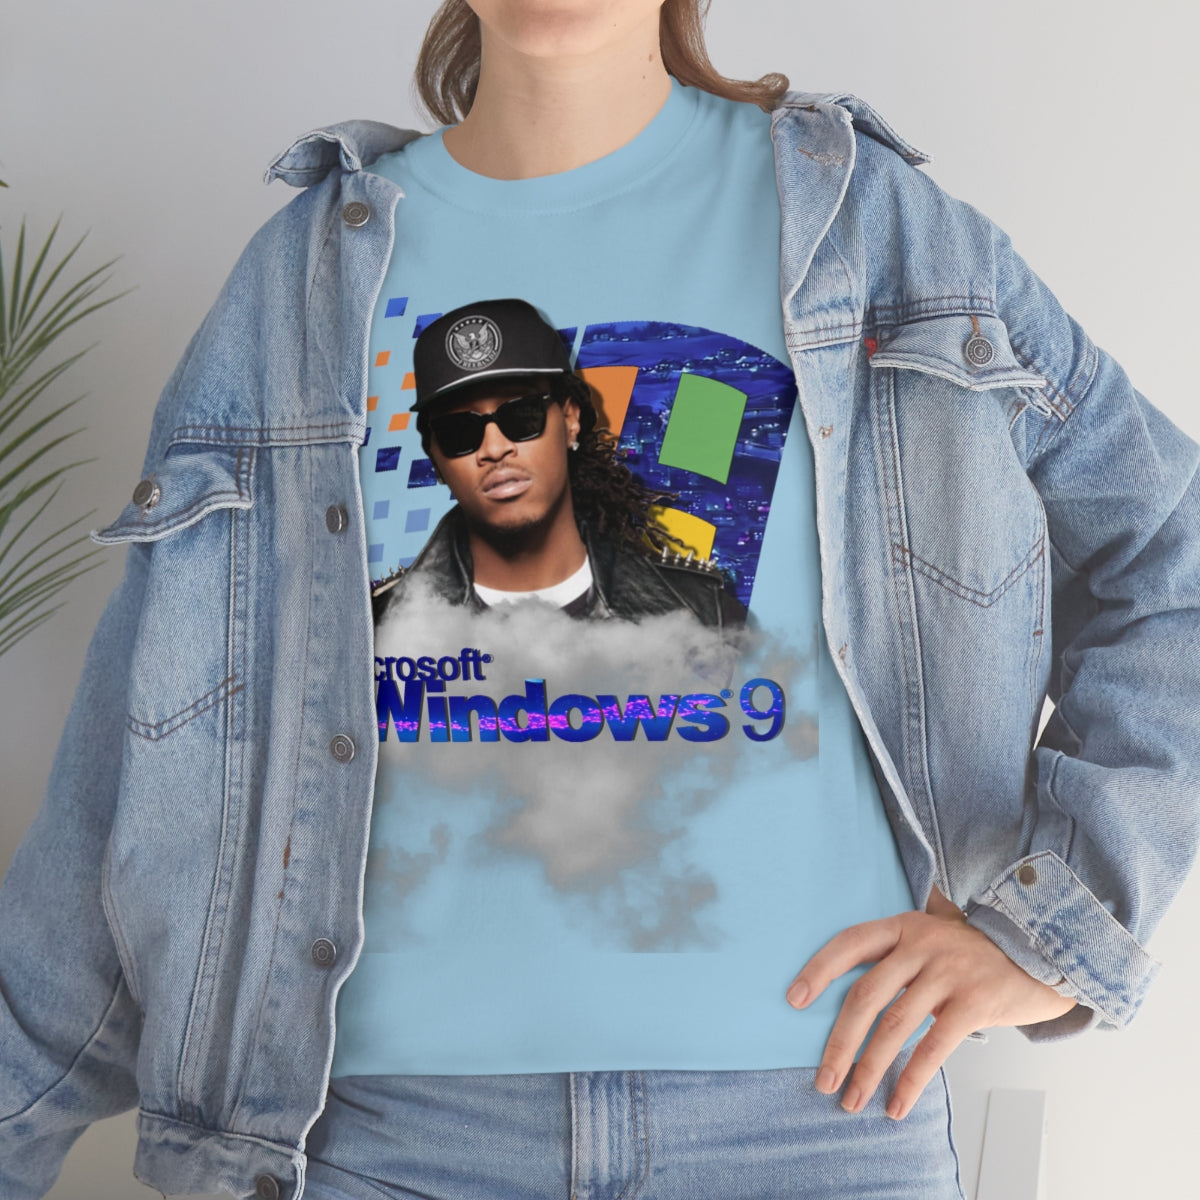 The Future of Windows 9 Shirt